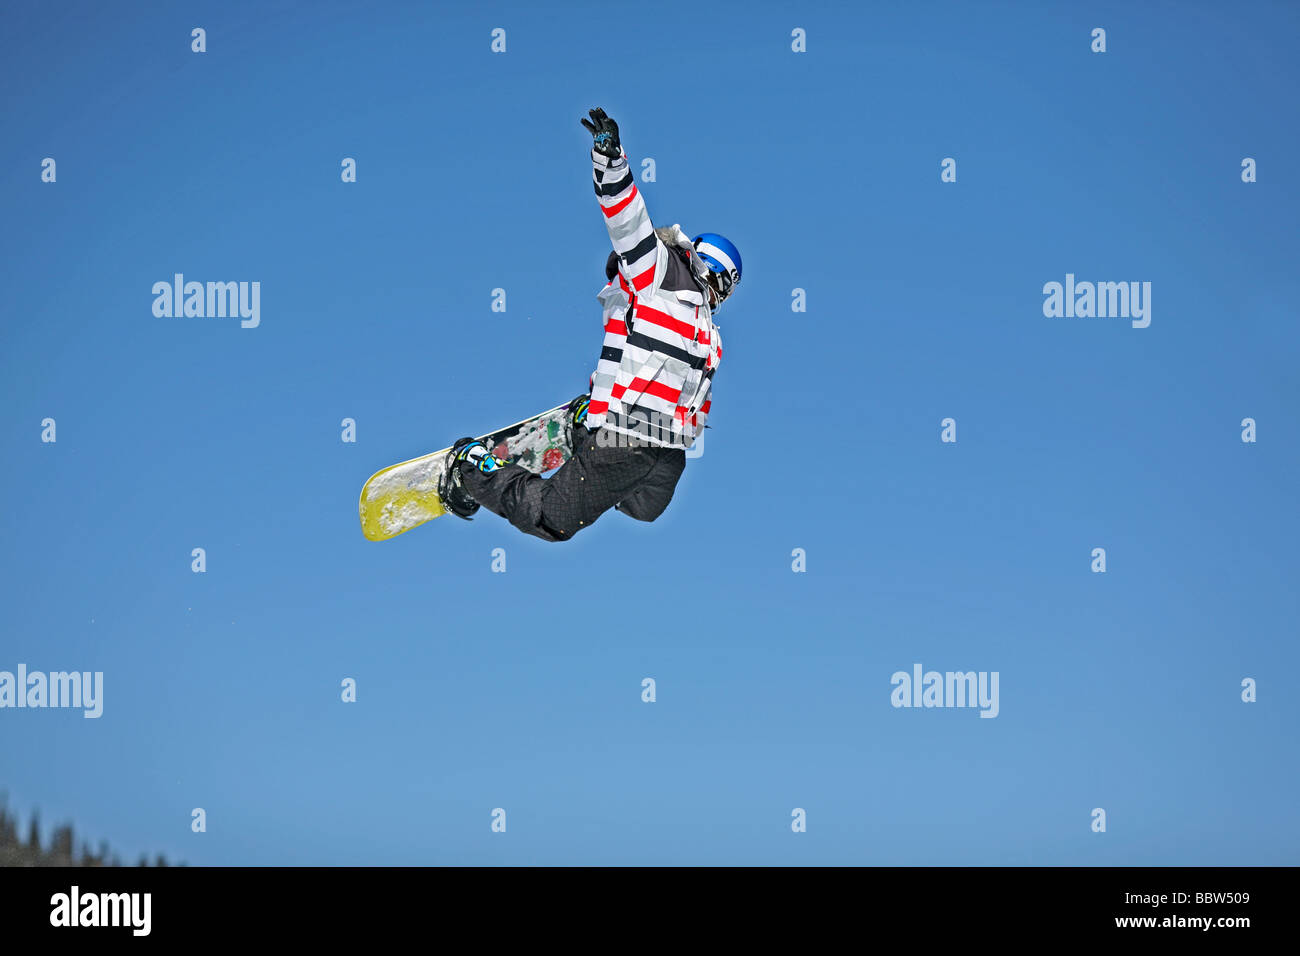 Snowboarder performs a big air in the terrain park. Brighton Ski Resort, Salt Lake City, Utah, USA Stock Photo